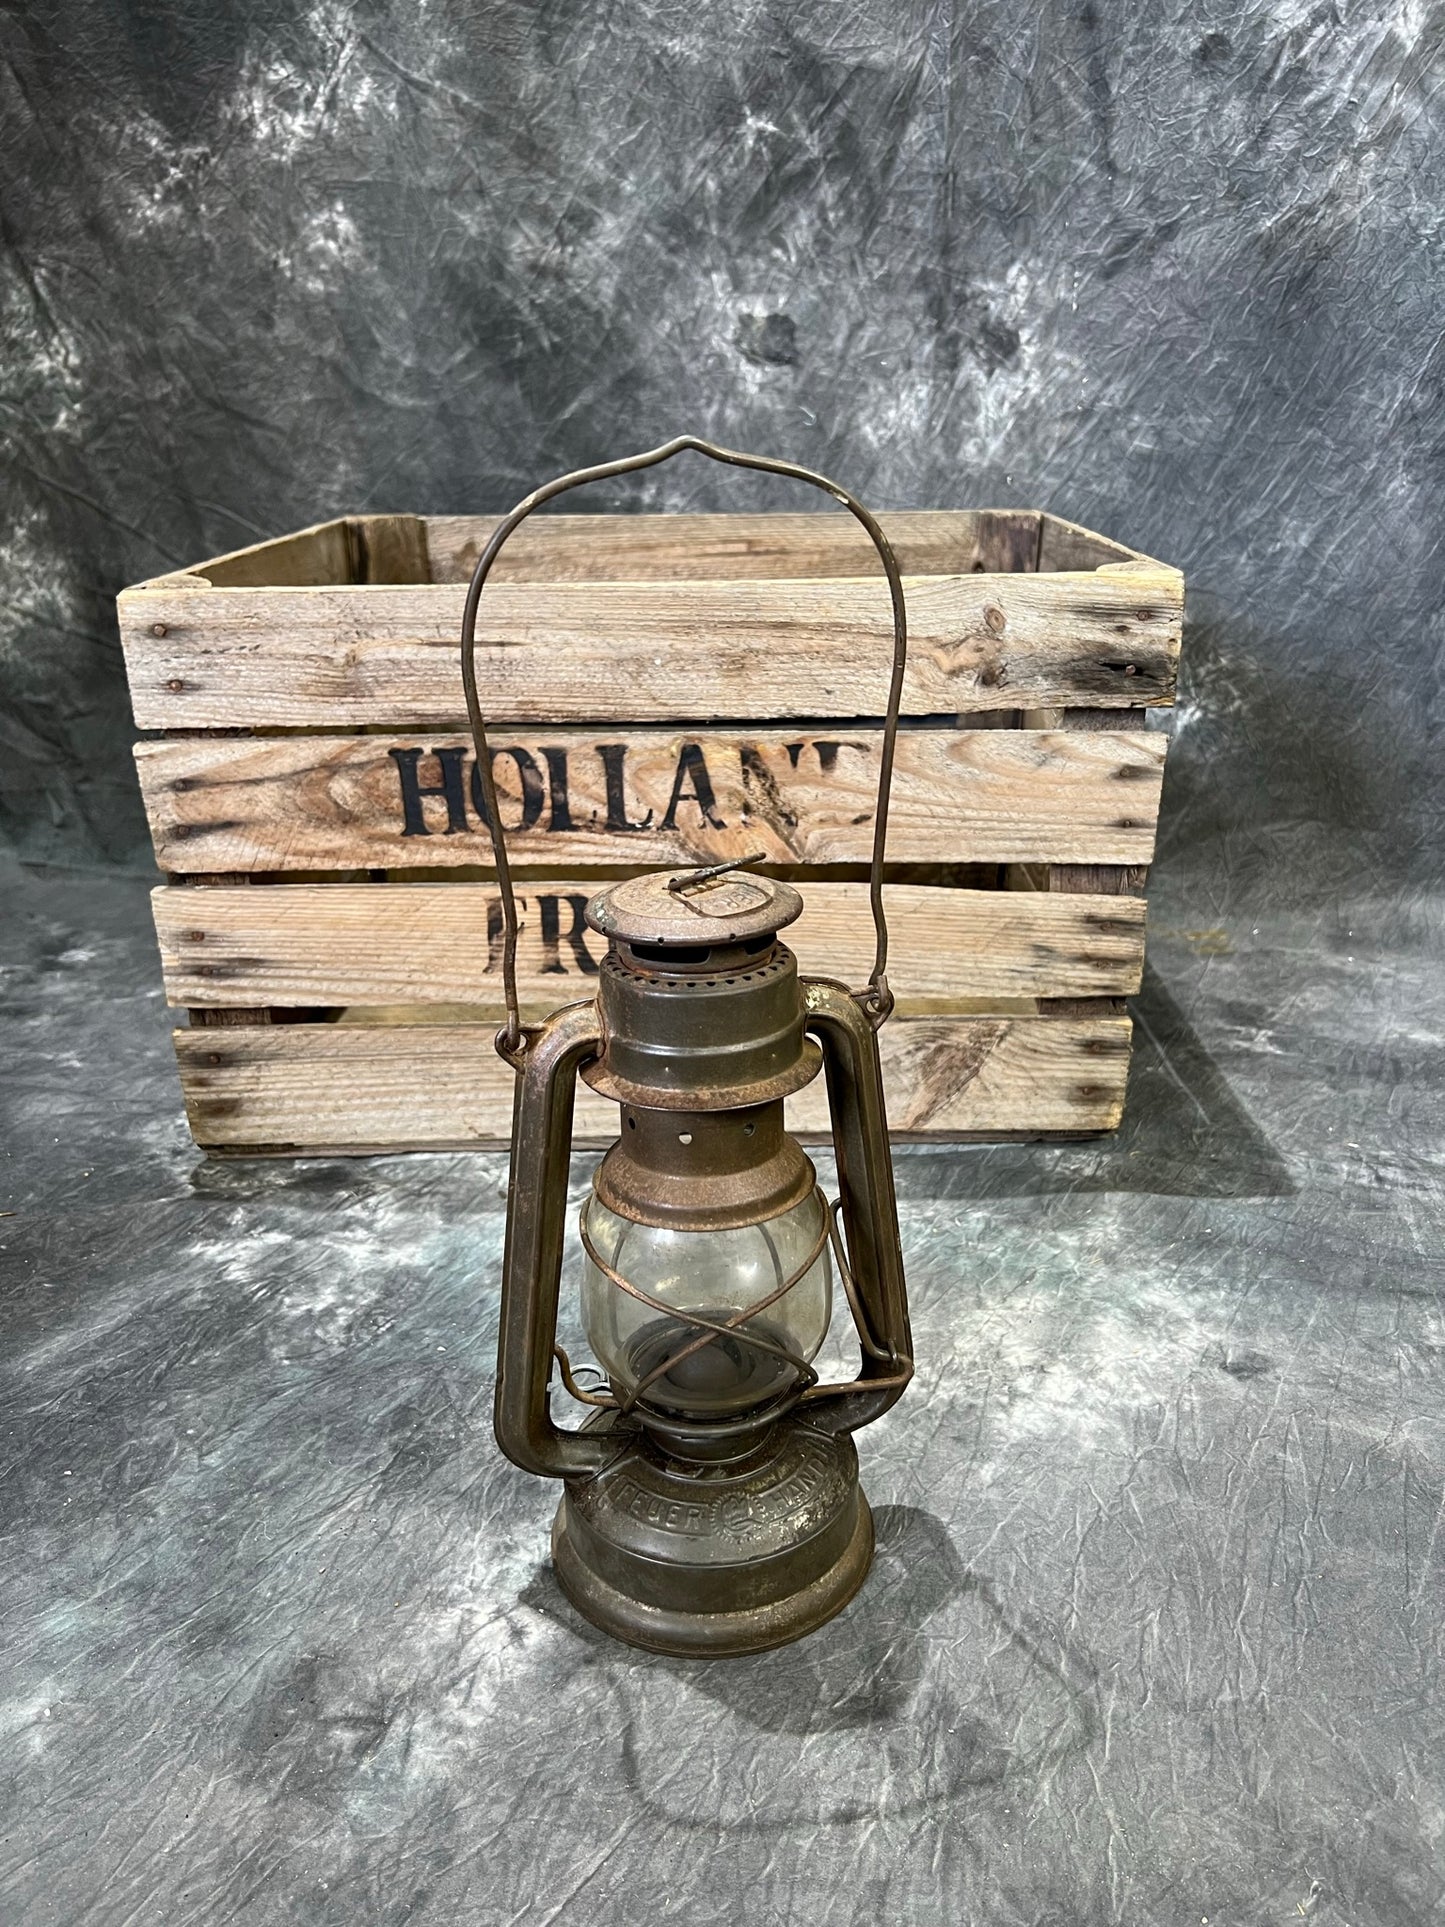 Vintage German Feuerhand Paraffin Oil Lantern Lamp Rustic Industrial Decor Display